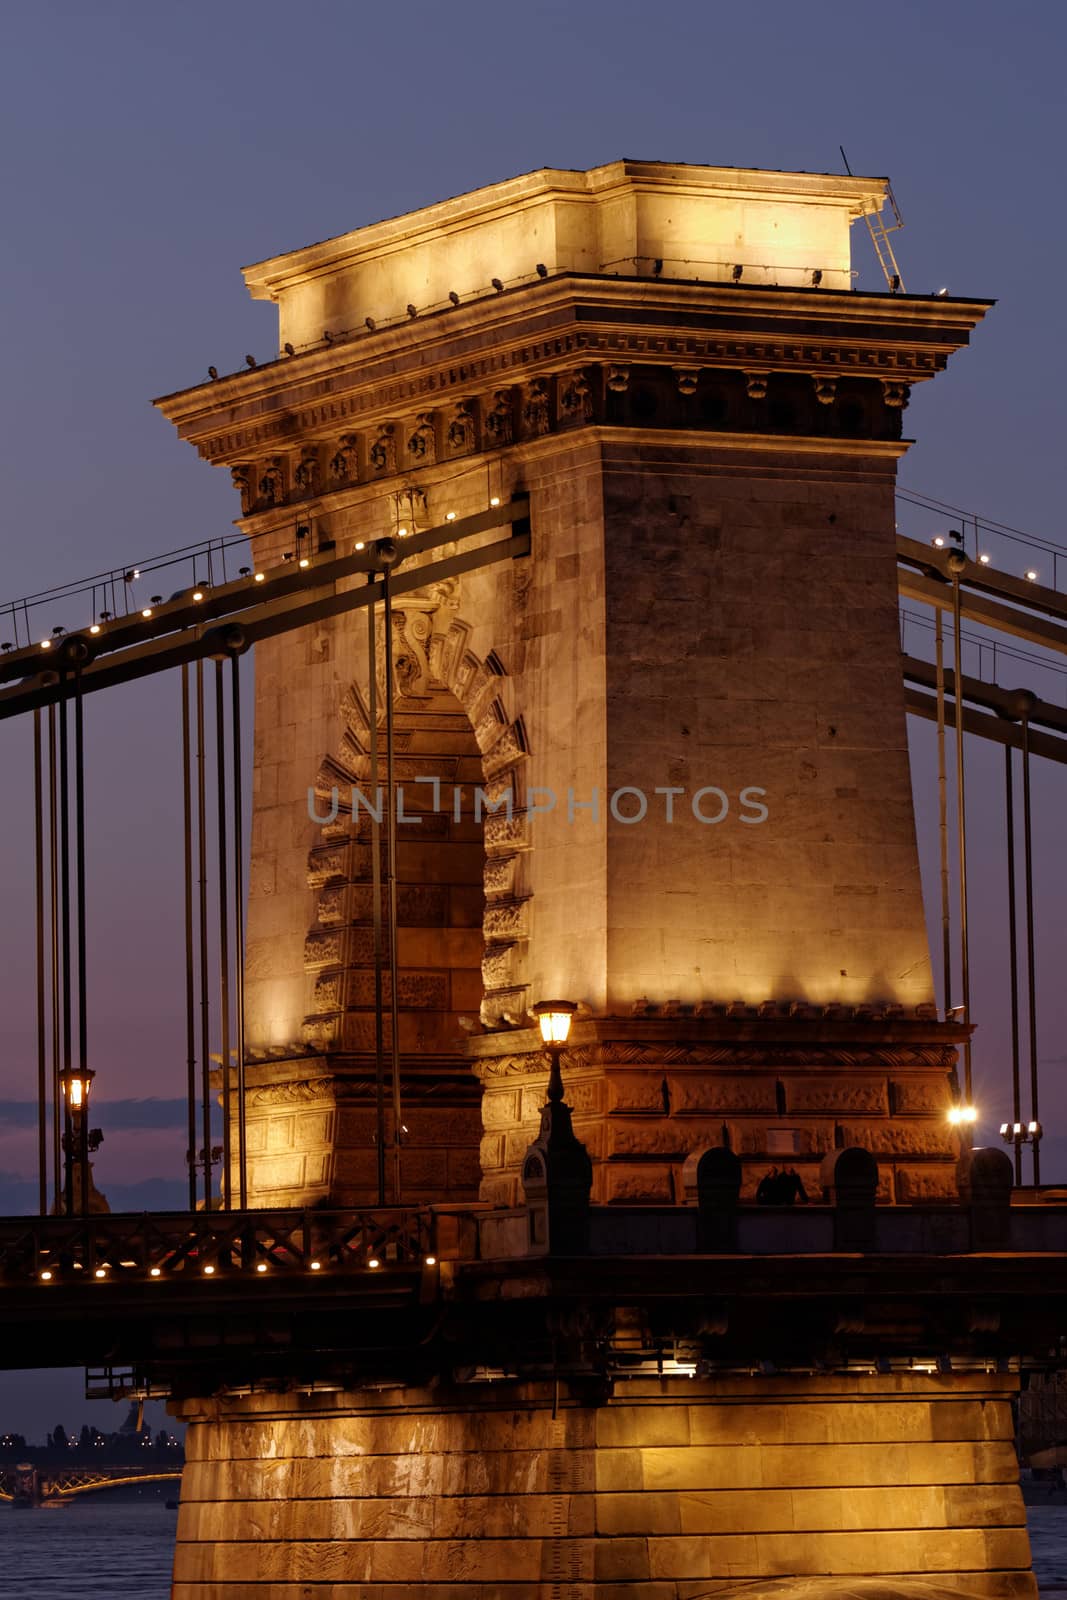 Night image of the hungarian chain Bridge by NagyDodo